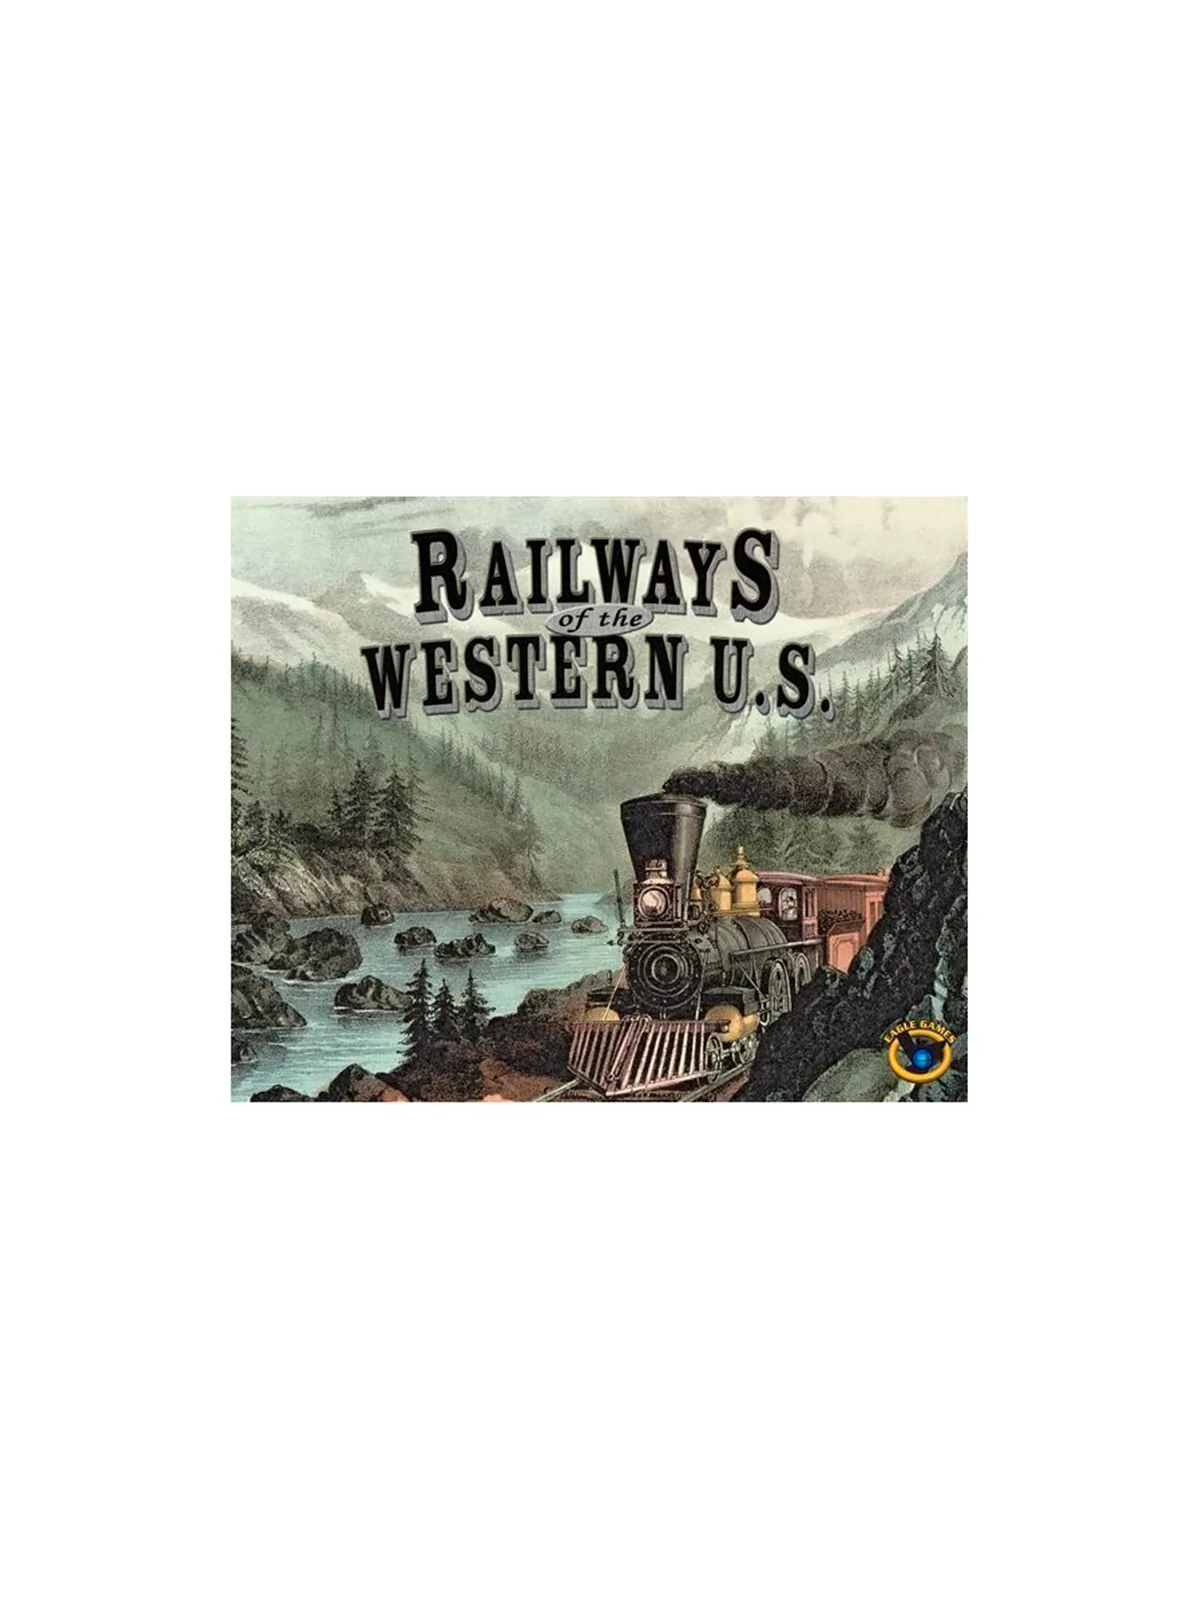 Comprar Railways of The Western U.S. 2019 Edition (Inglés) barato al m